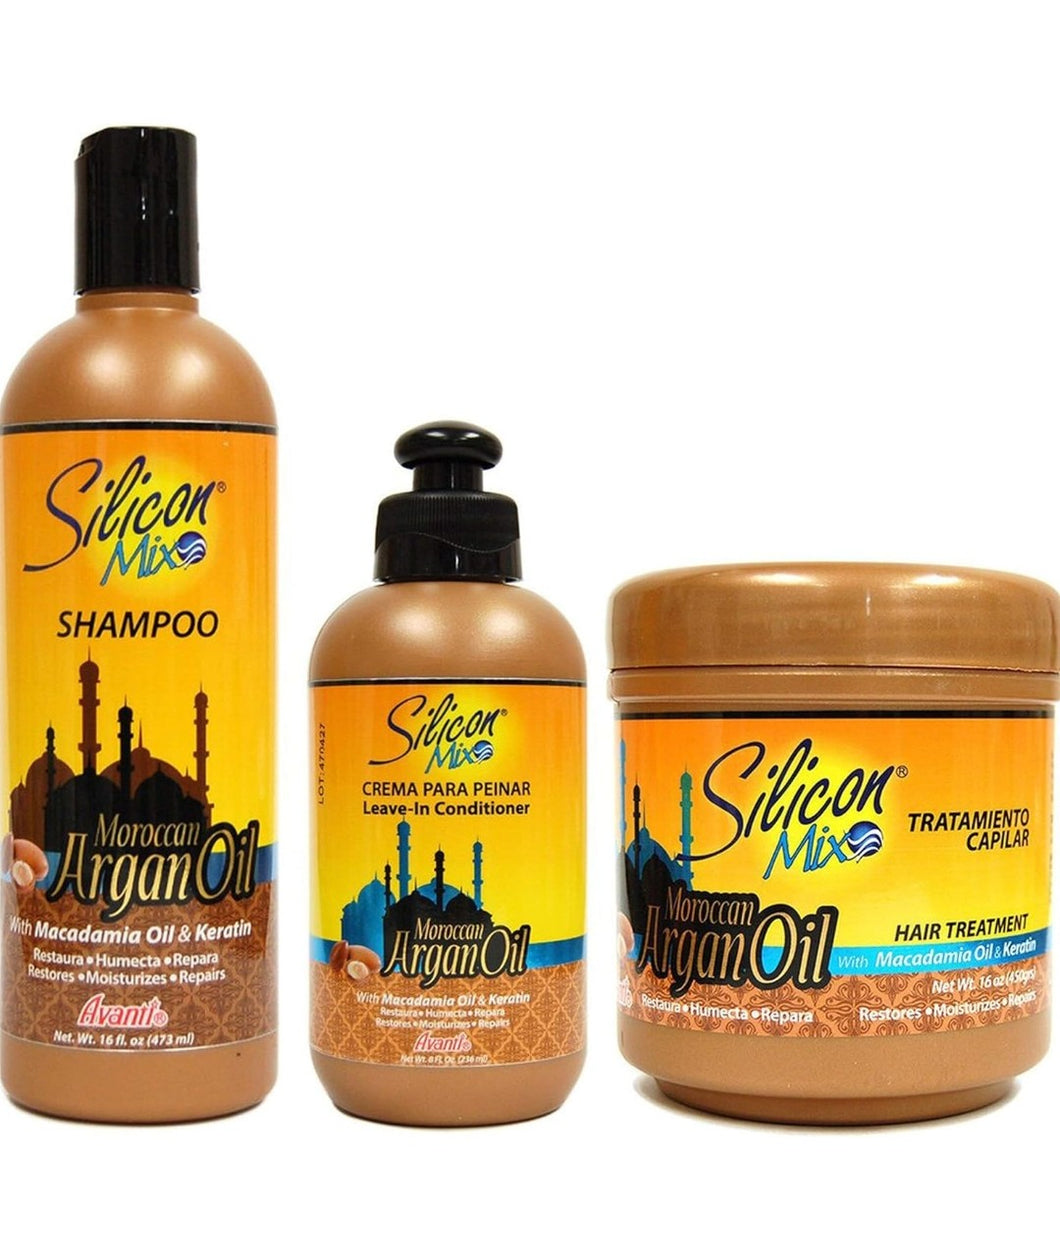 Silicon Mix Moroccan Argan Oil hair treatment